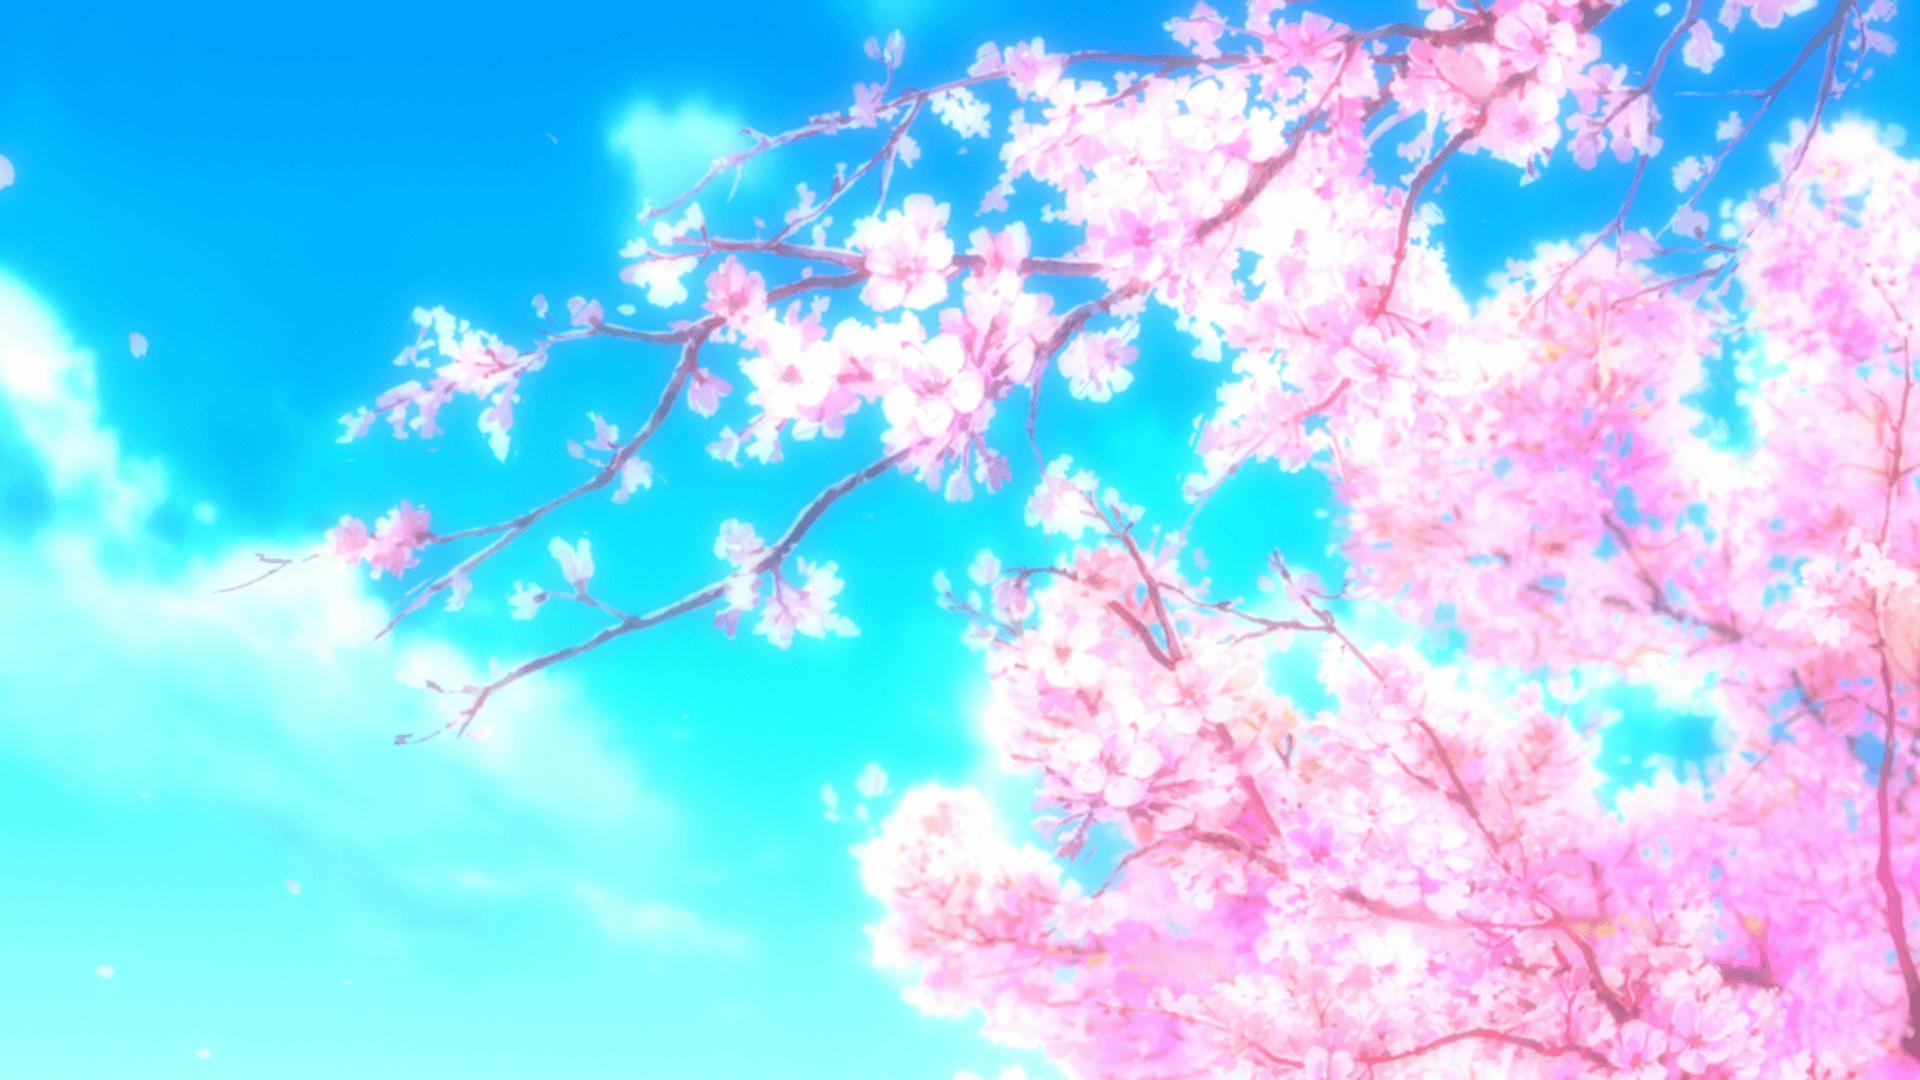 Cherry Blossom Anime Images - Free Download on Freepik